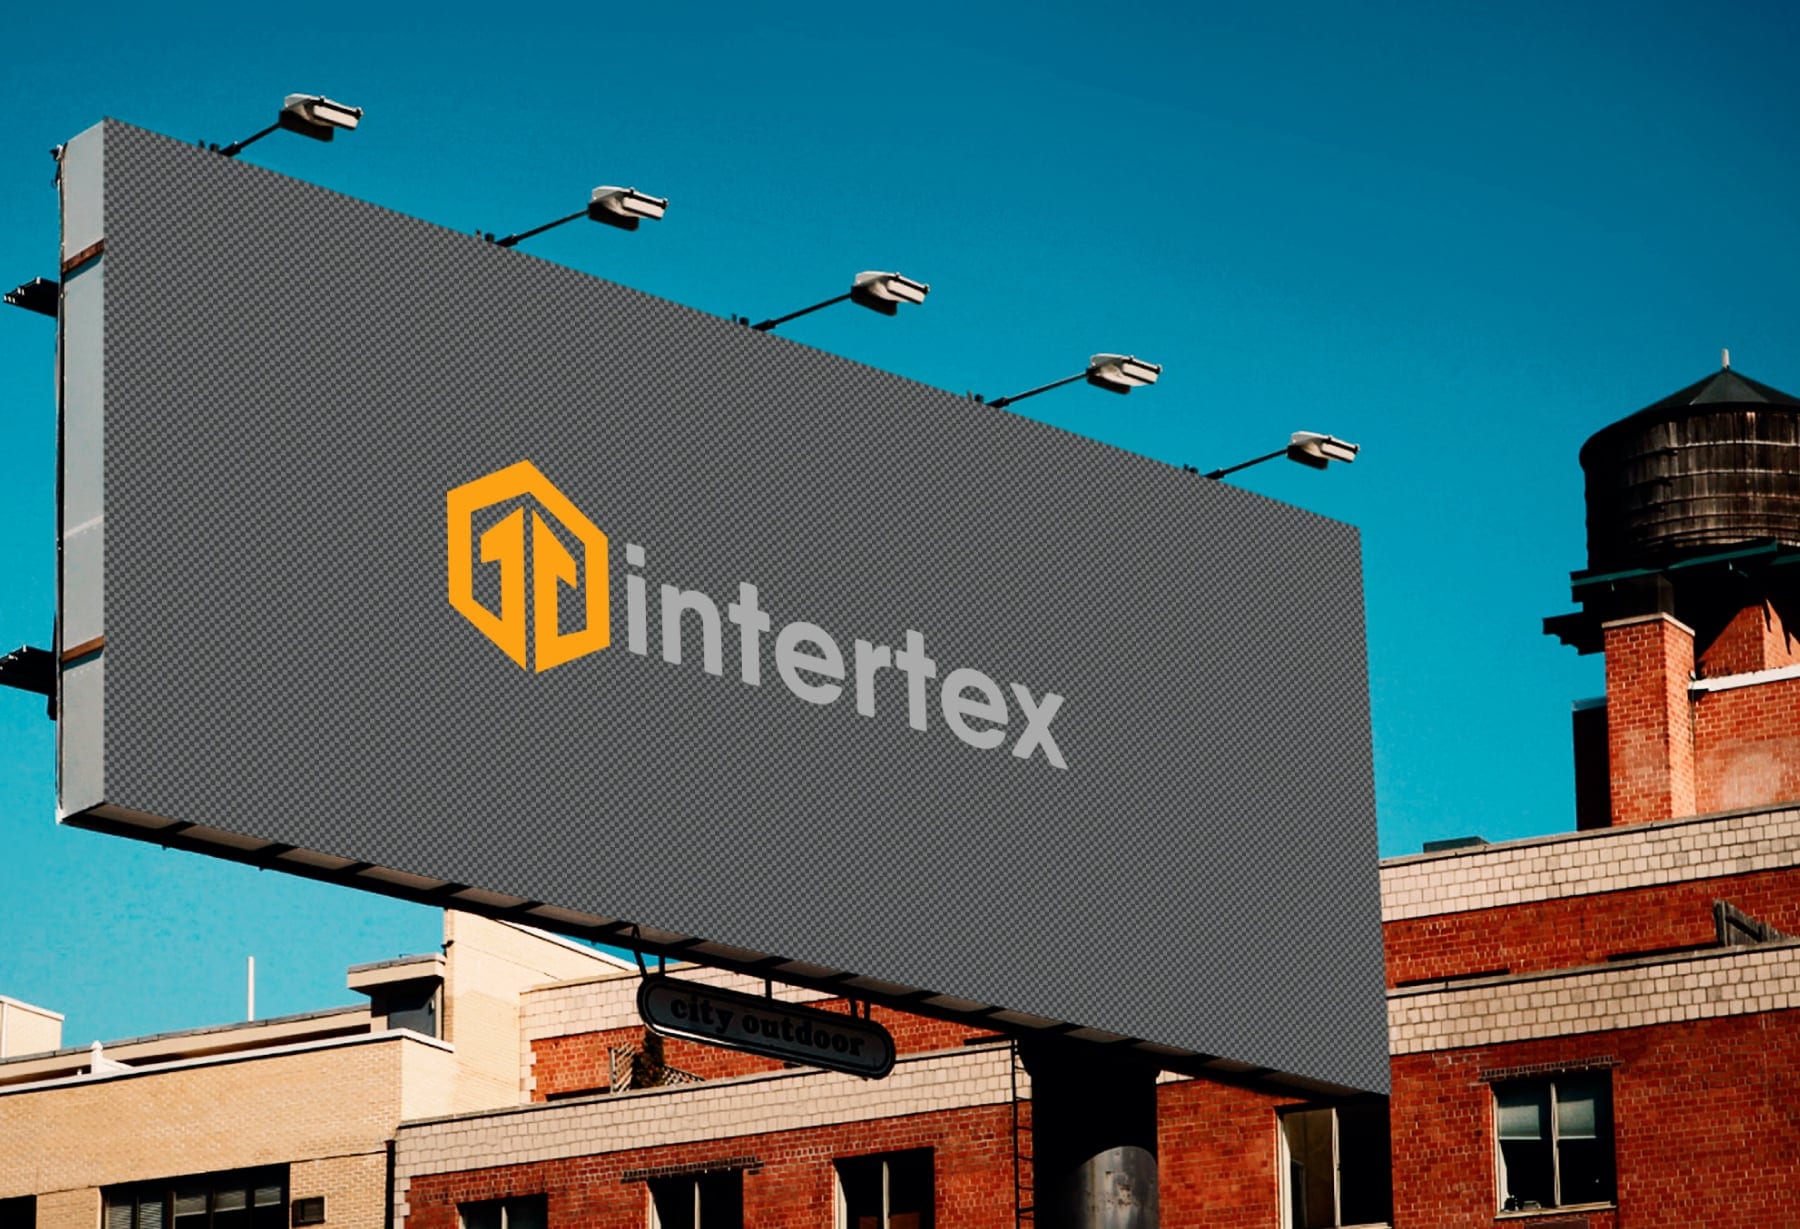 intertex